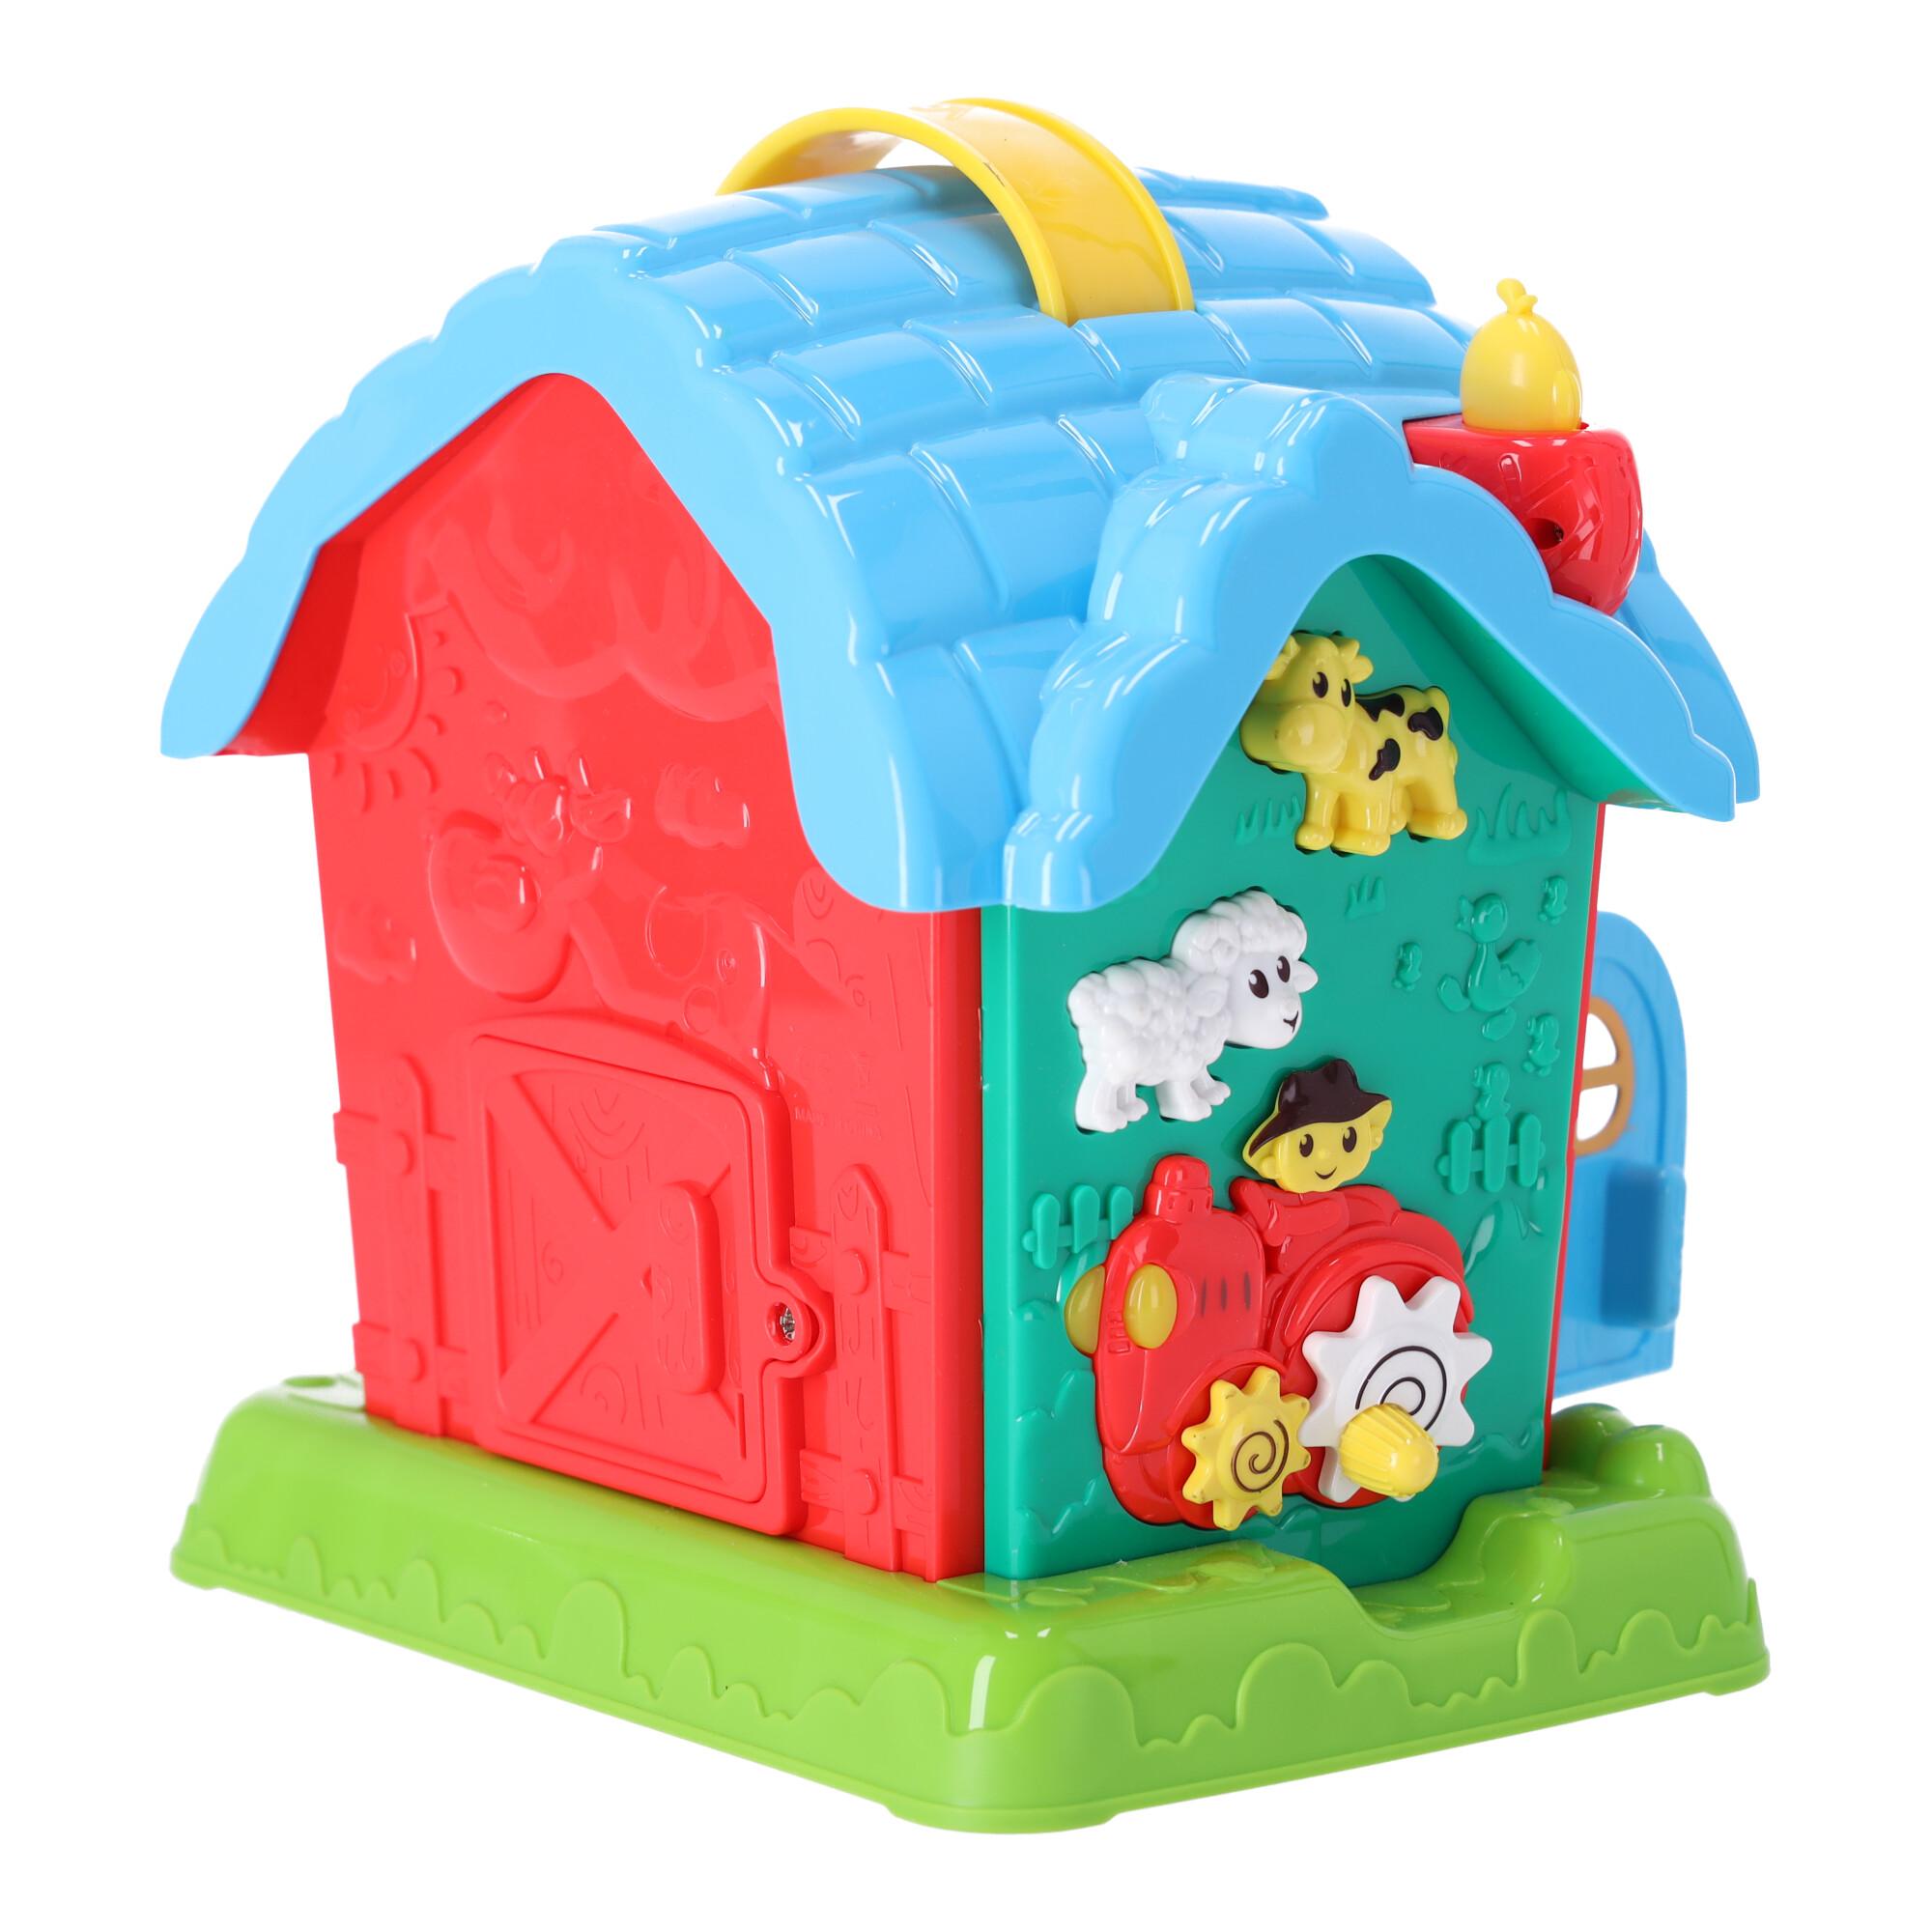 Farmer house set toy-model